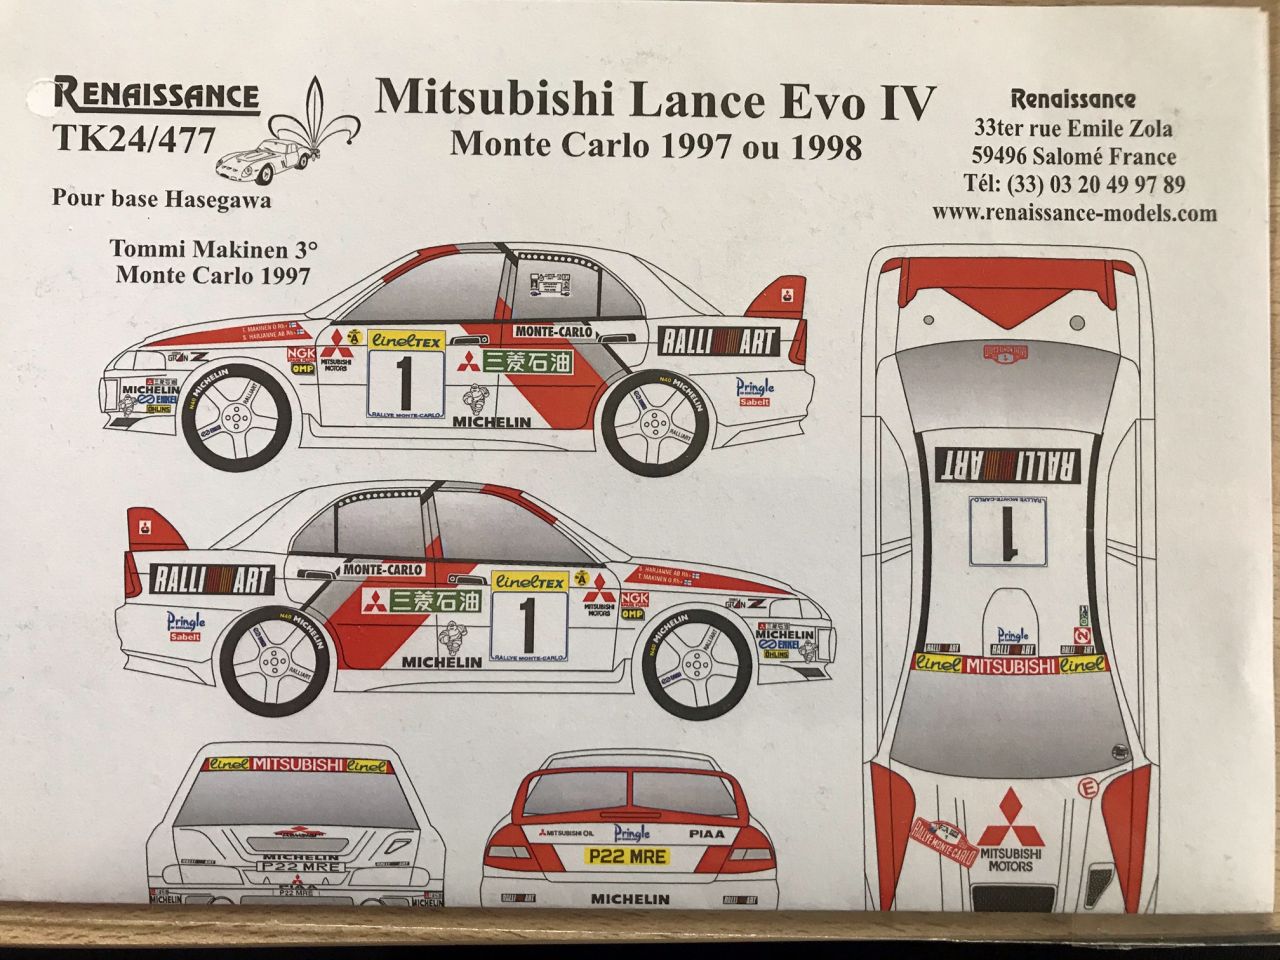 Renaissance TK24/477 Mitsubishi Lancer Evo IV - Monte Carlo 1997 ou 1998